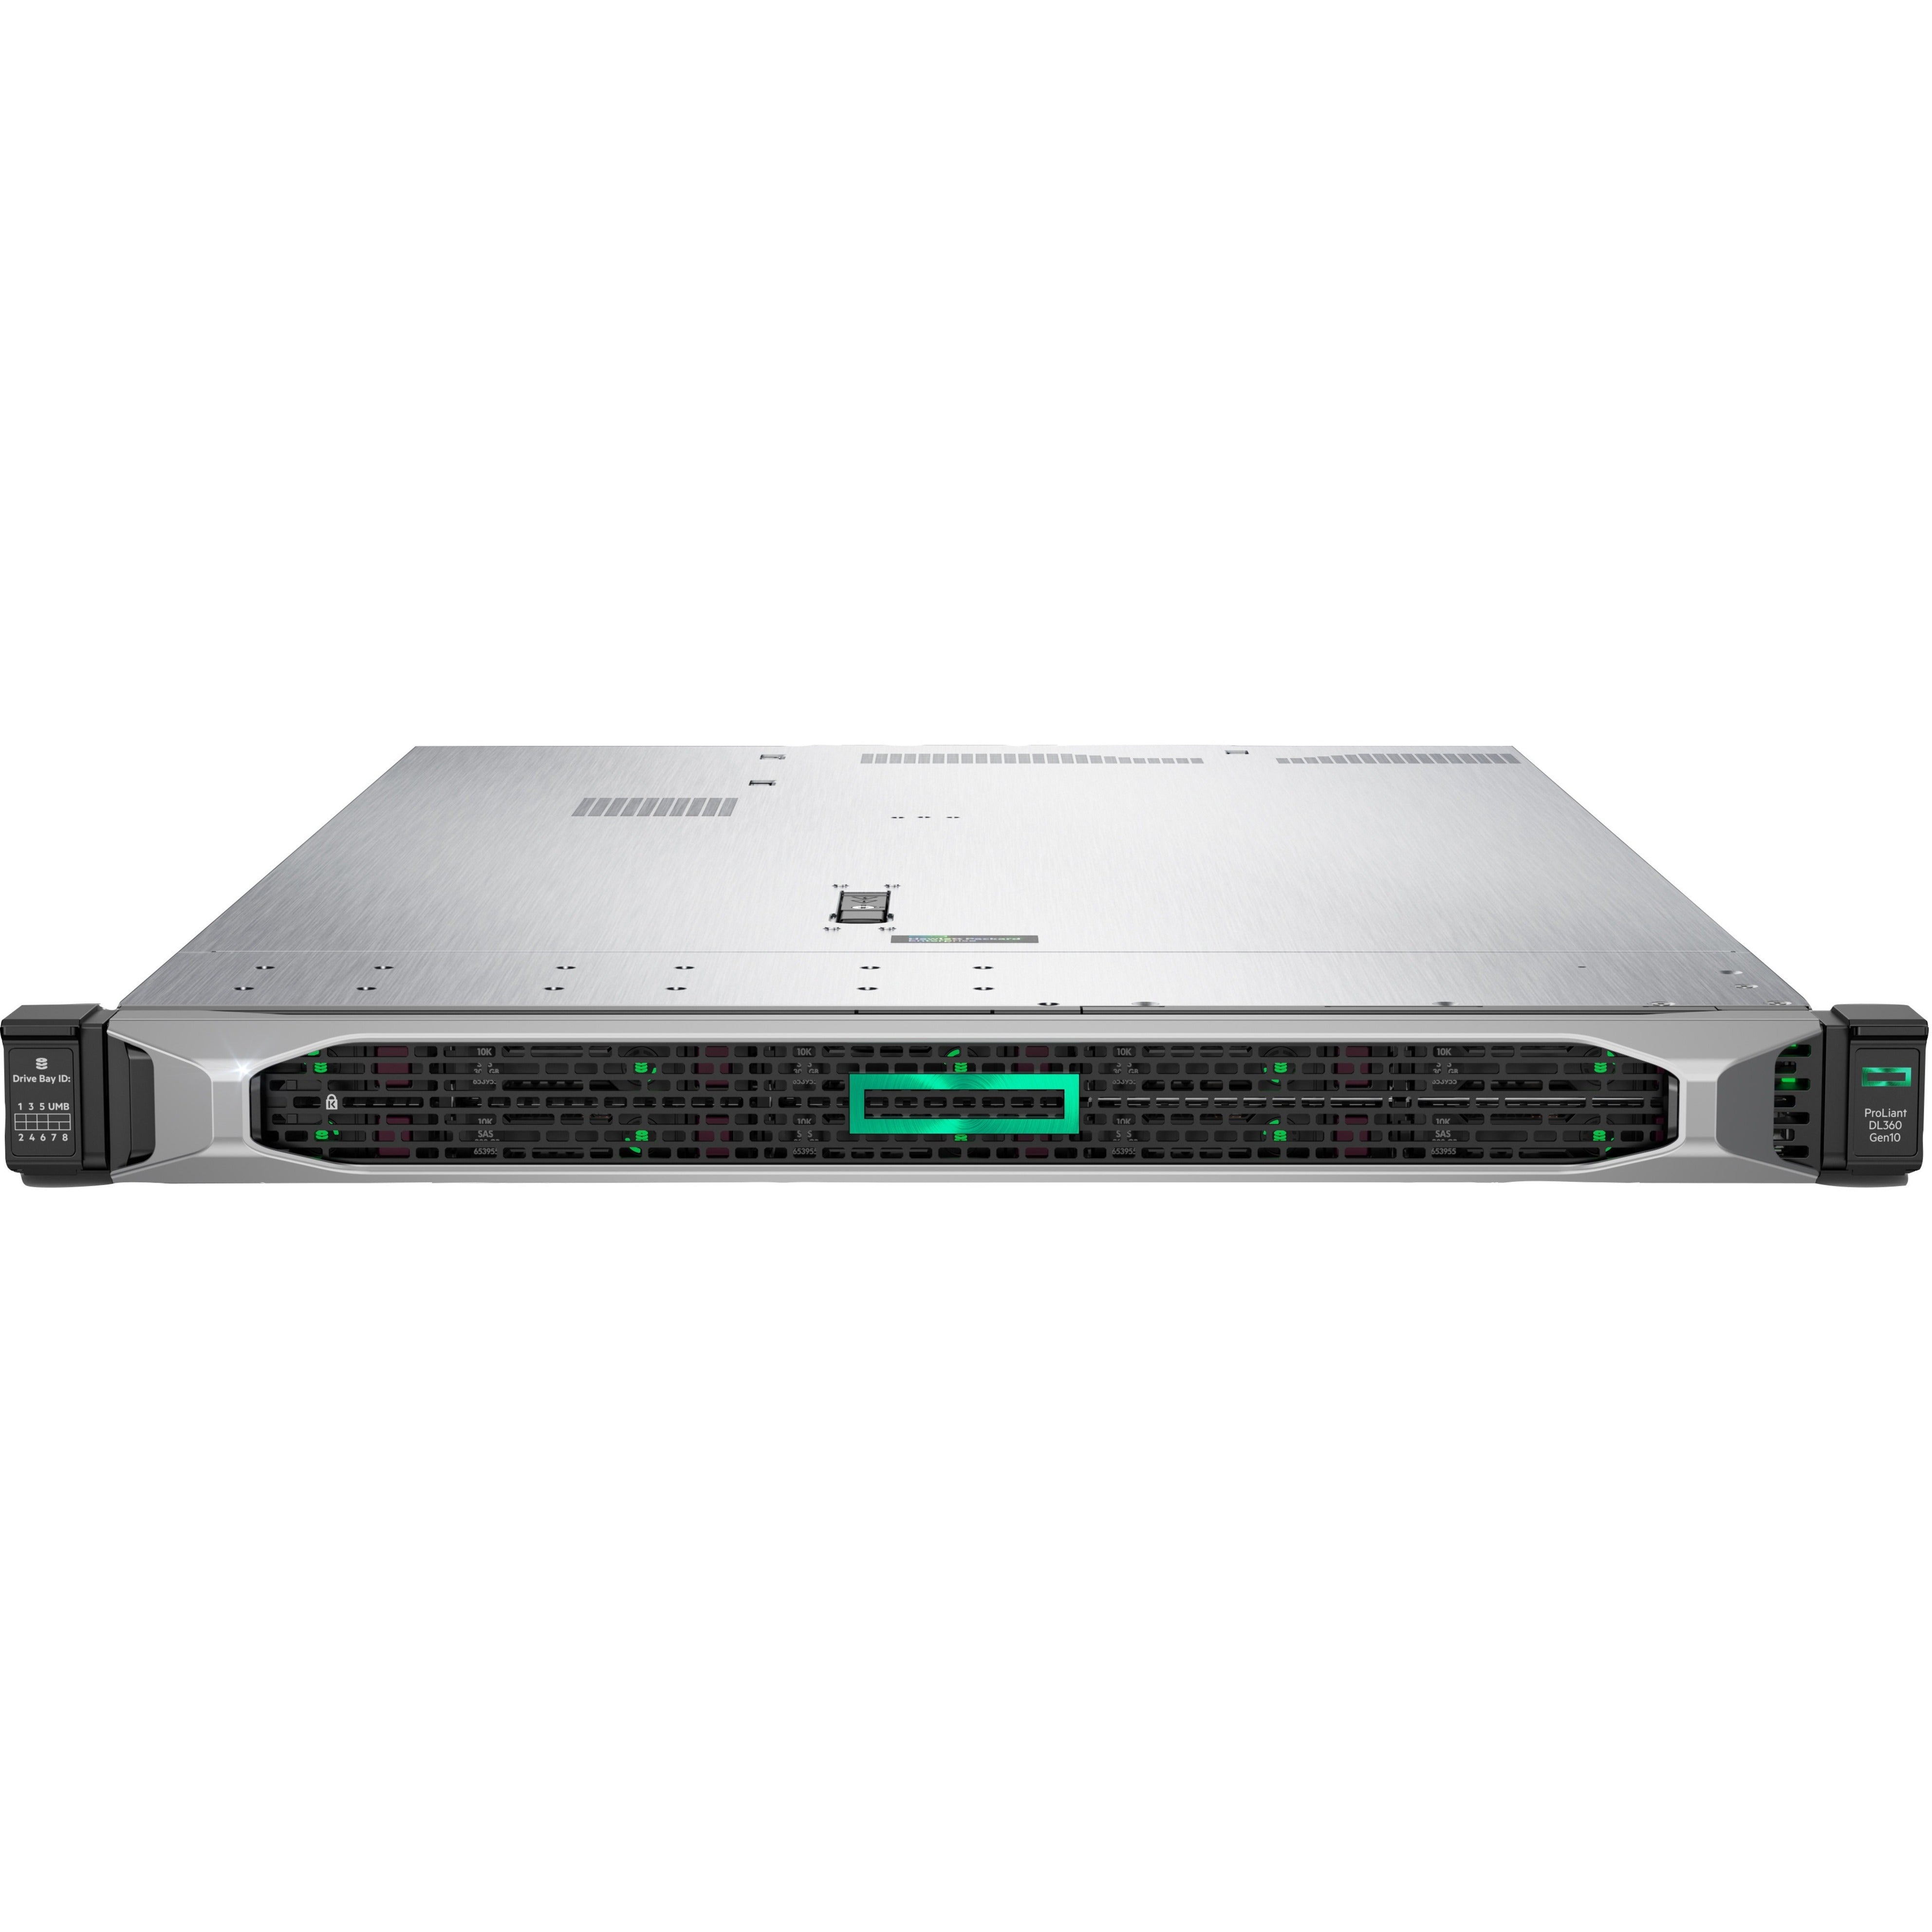 HPE E ProLiant DL360 G10 1U Rack Server - 1 x Intel Xeon Silver 4208 2.10 GHz - 16 GB RAM - Serial ATA/600, 12Gb/s SAS Controller (P19774-B21) [Discontinued]